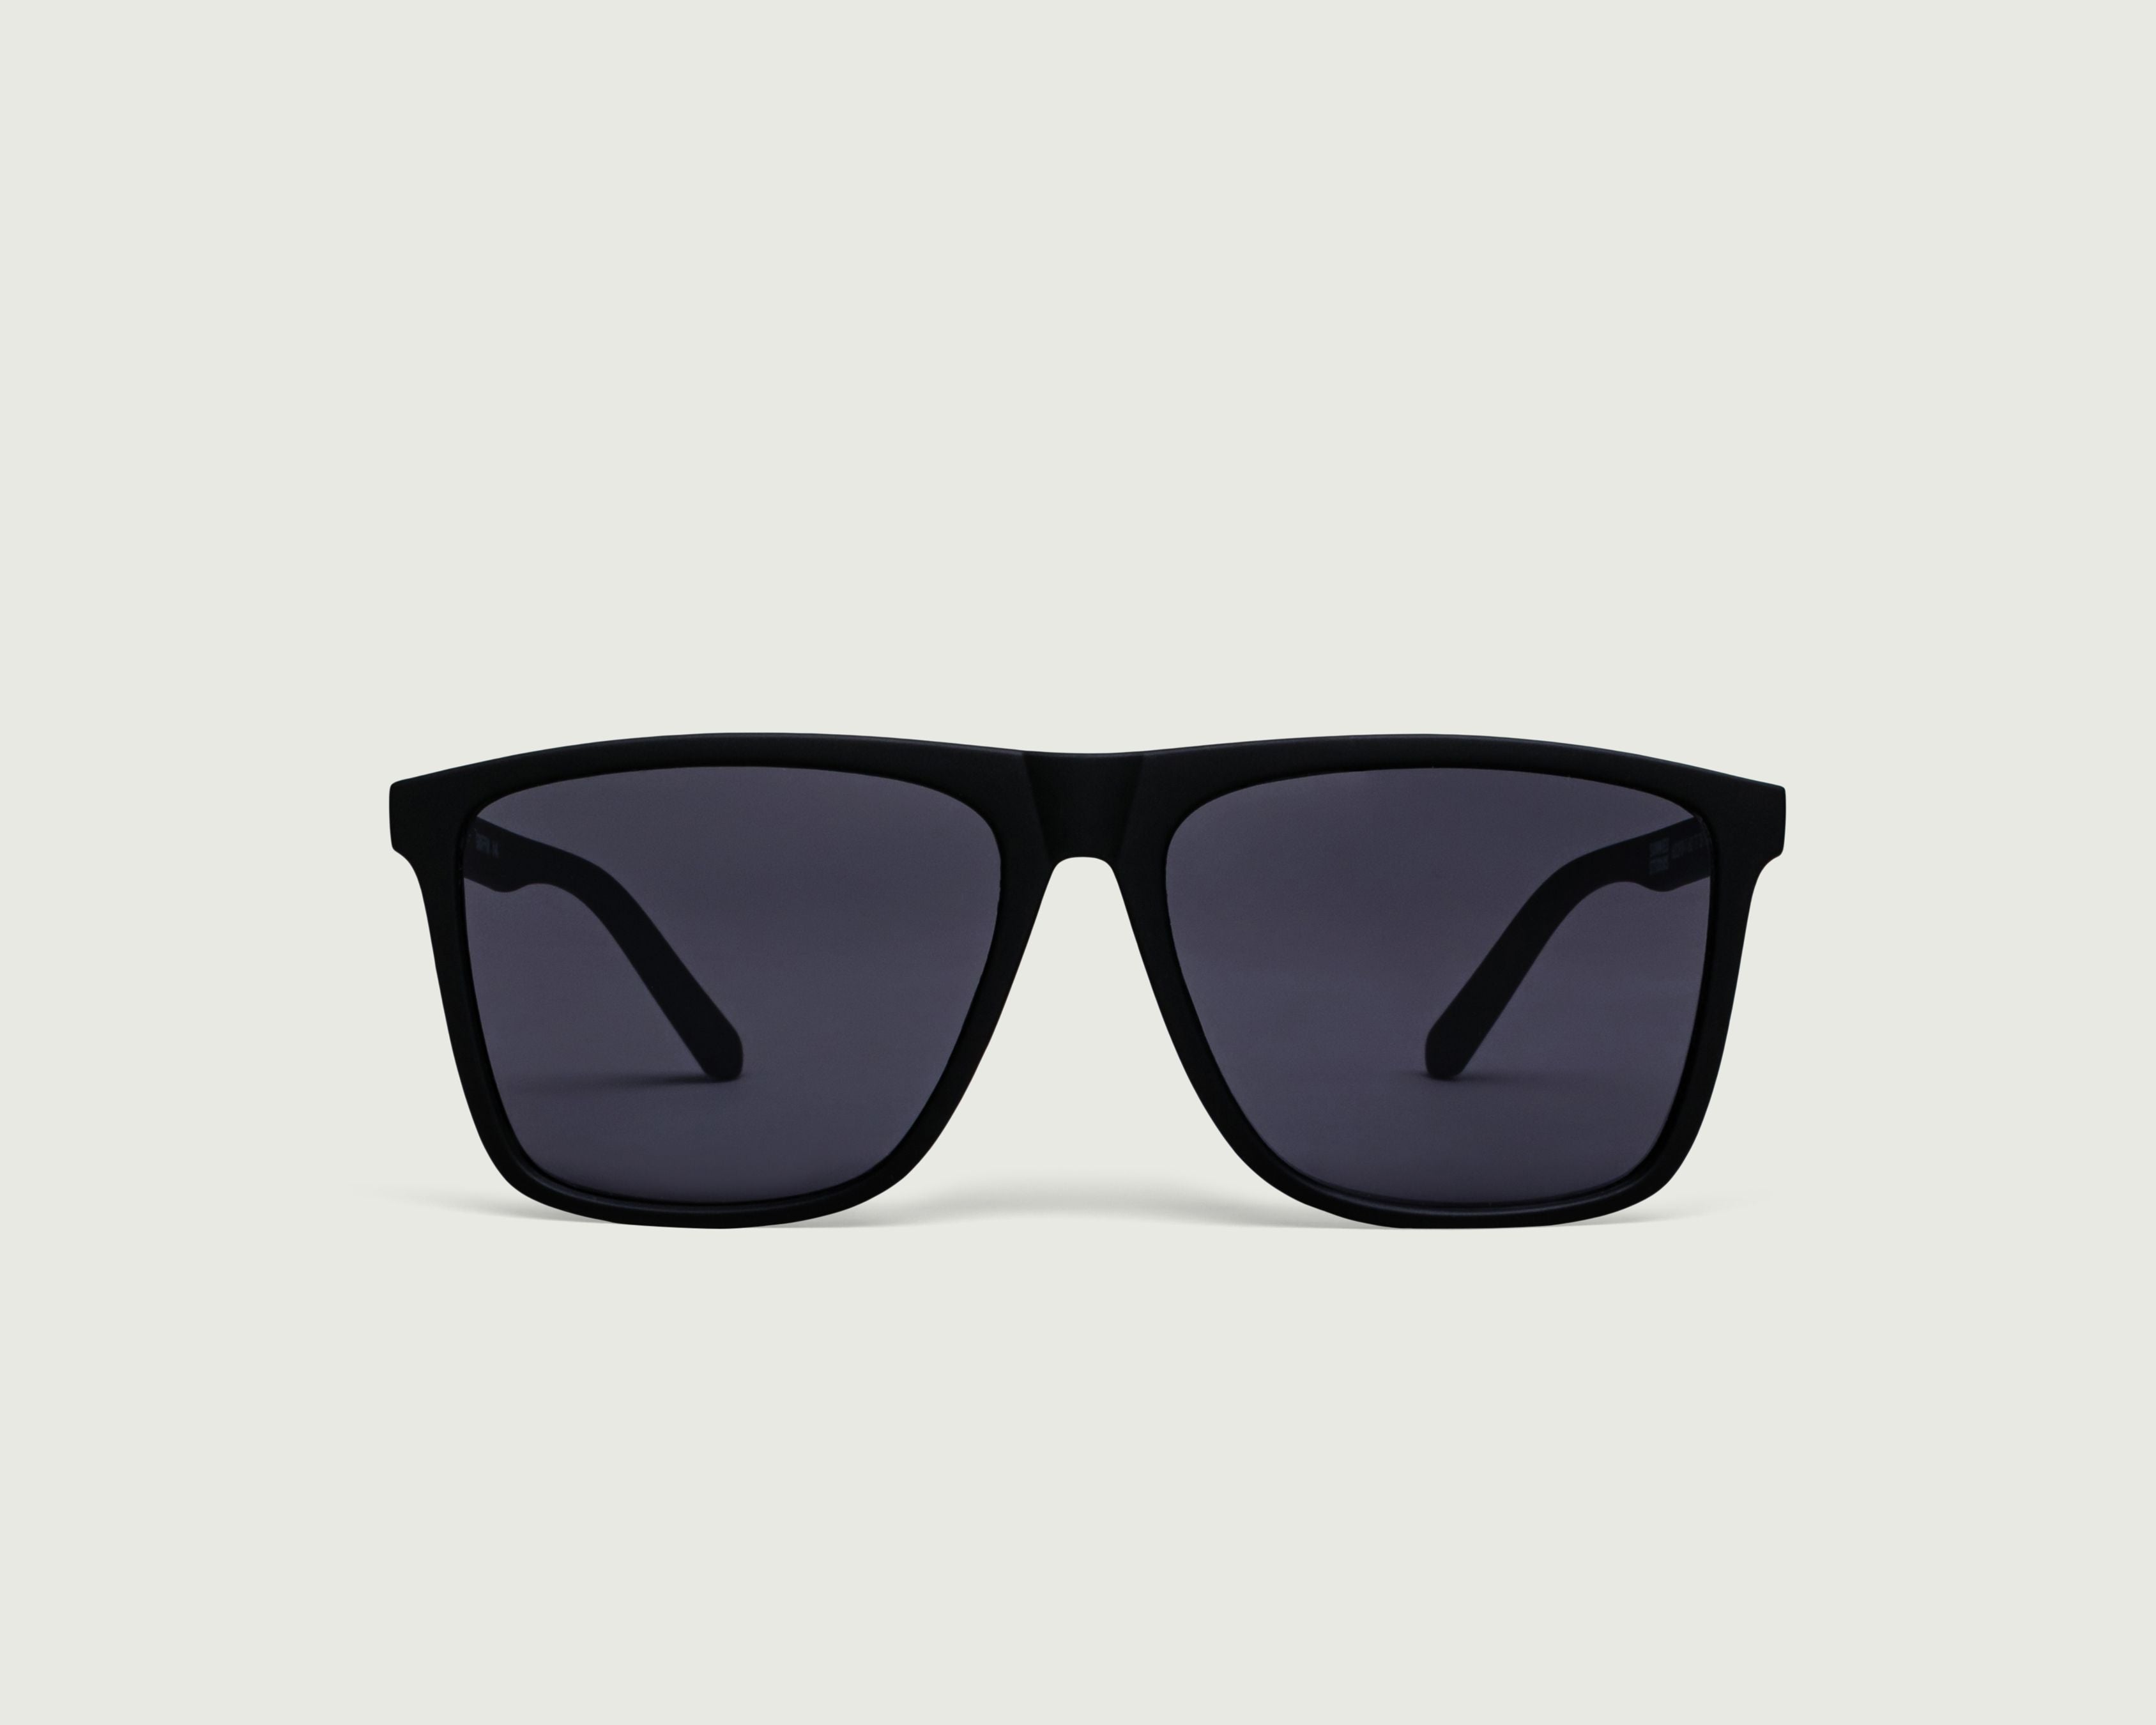 Ink::Griffin Sunglasses square black plastic front